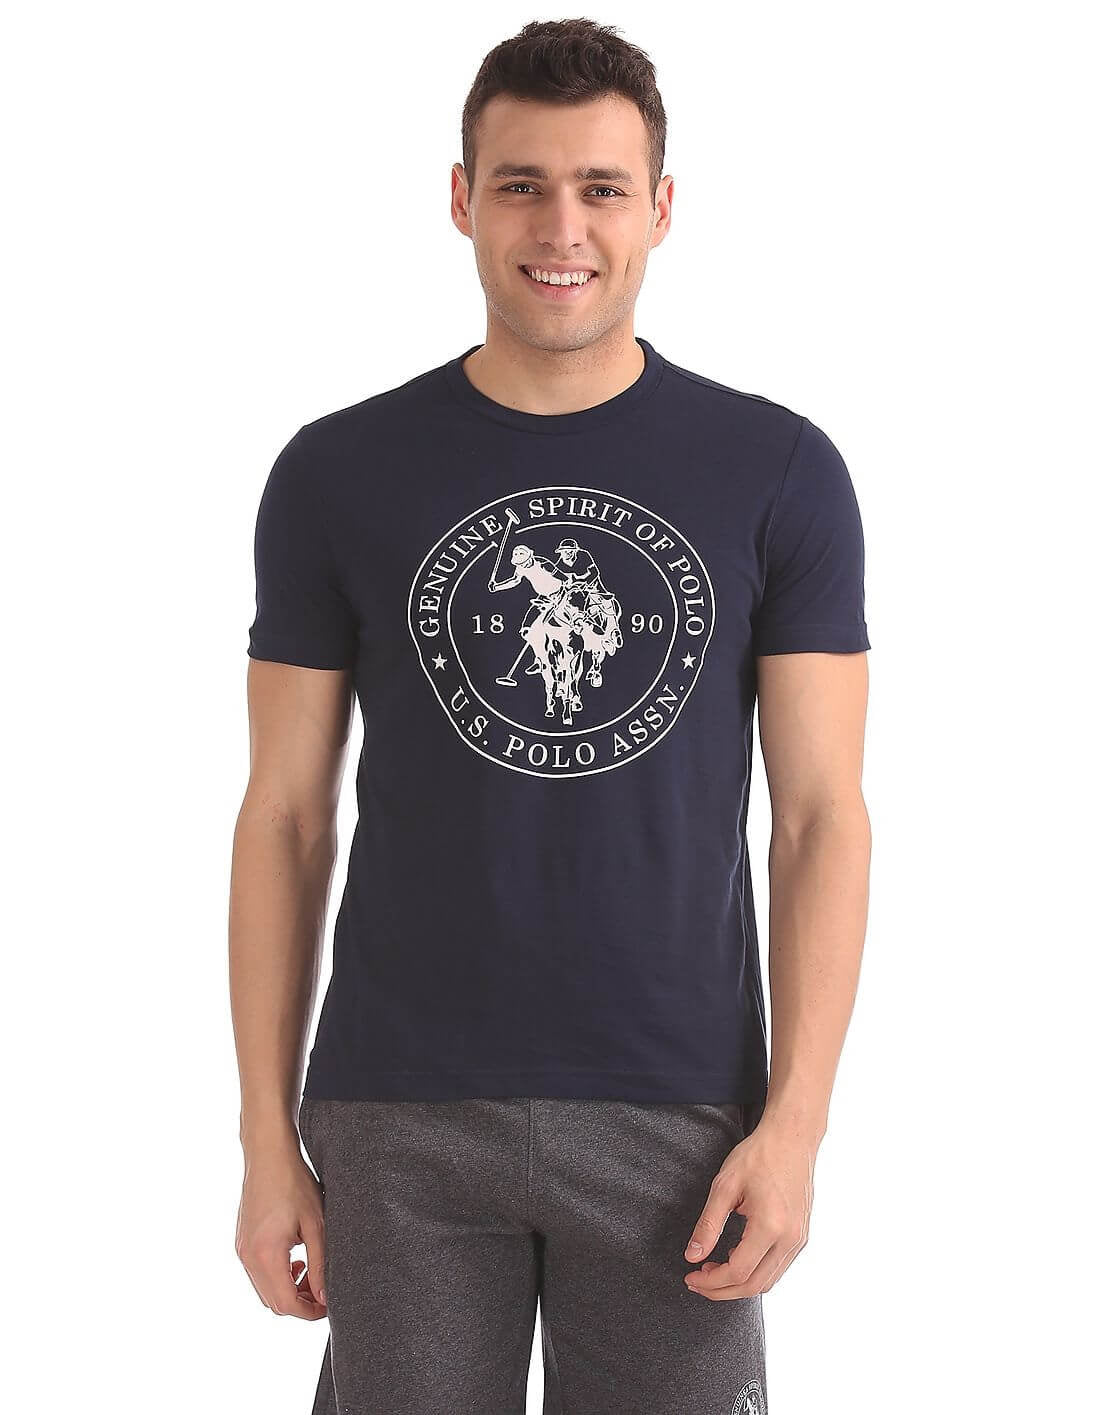 U S Polo Assn Navy Graphic Tshirt #I643